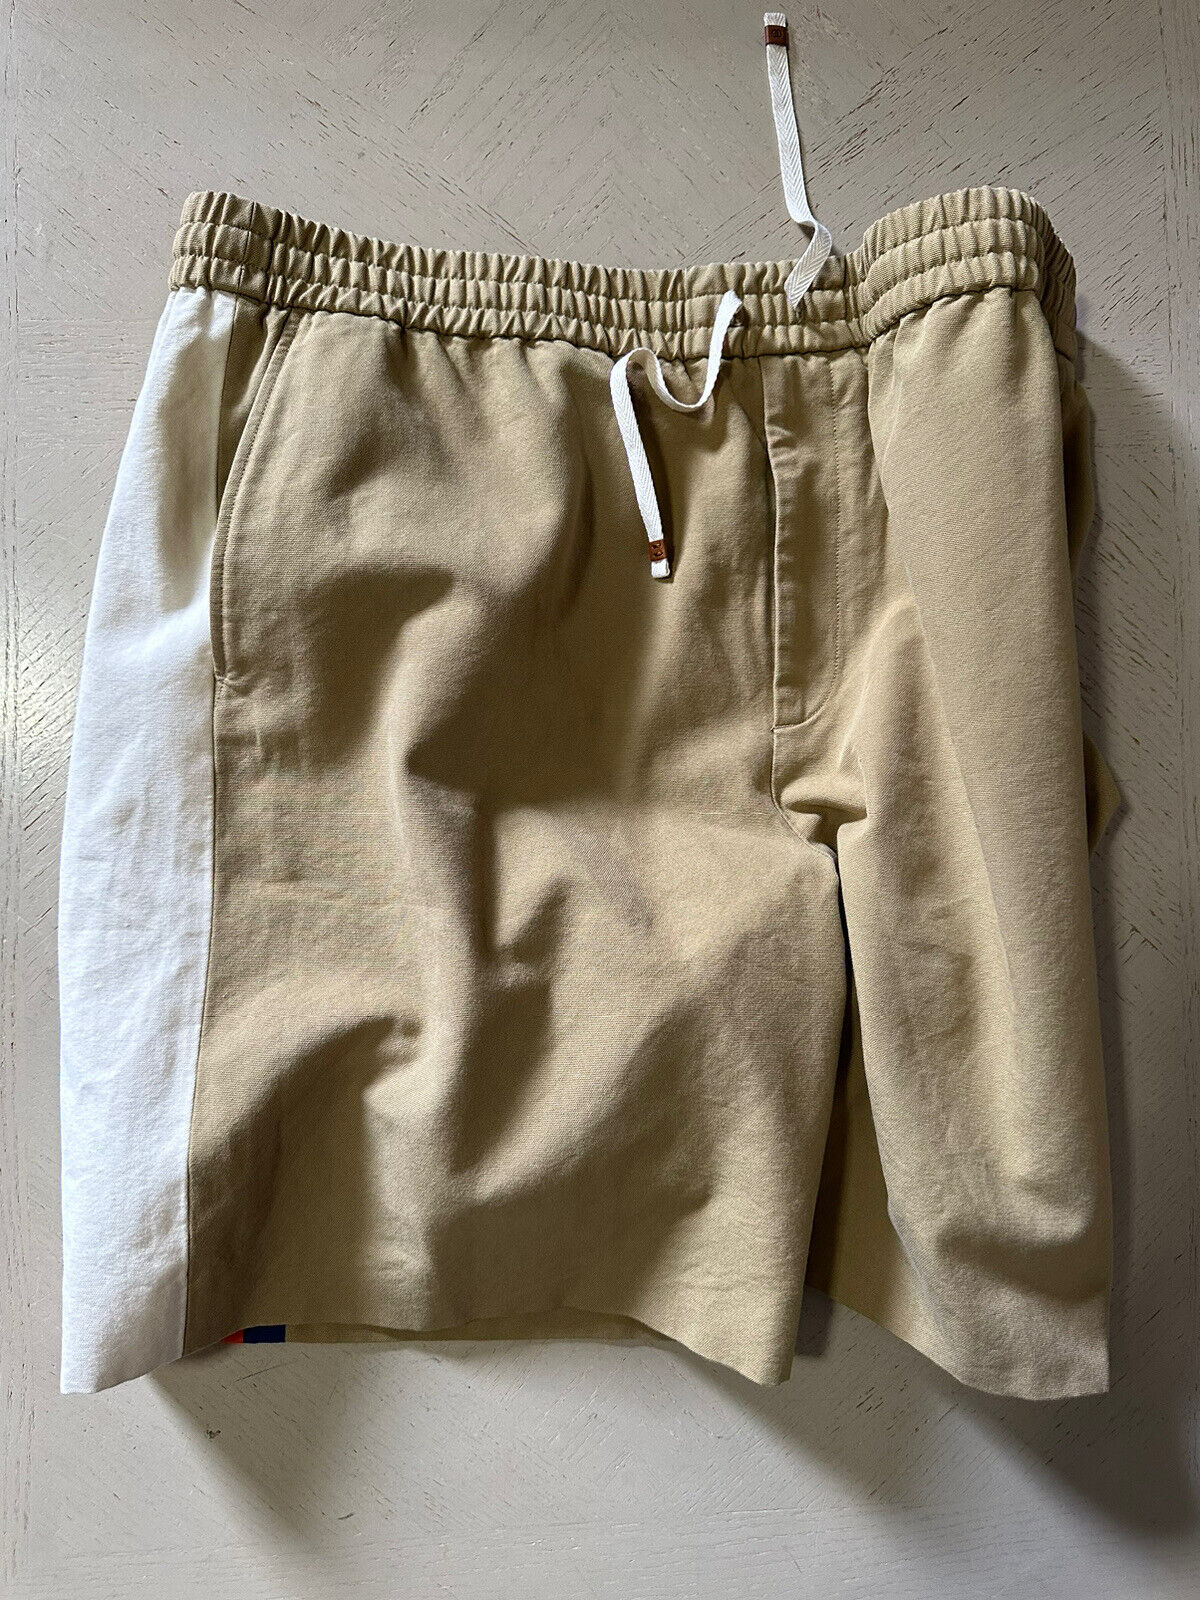 NWT $1400 Gucci Men Lweight Cotton Canvas Short Pants DK Beige/ Mul. 40 US/56 Eu